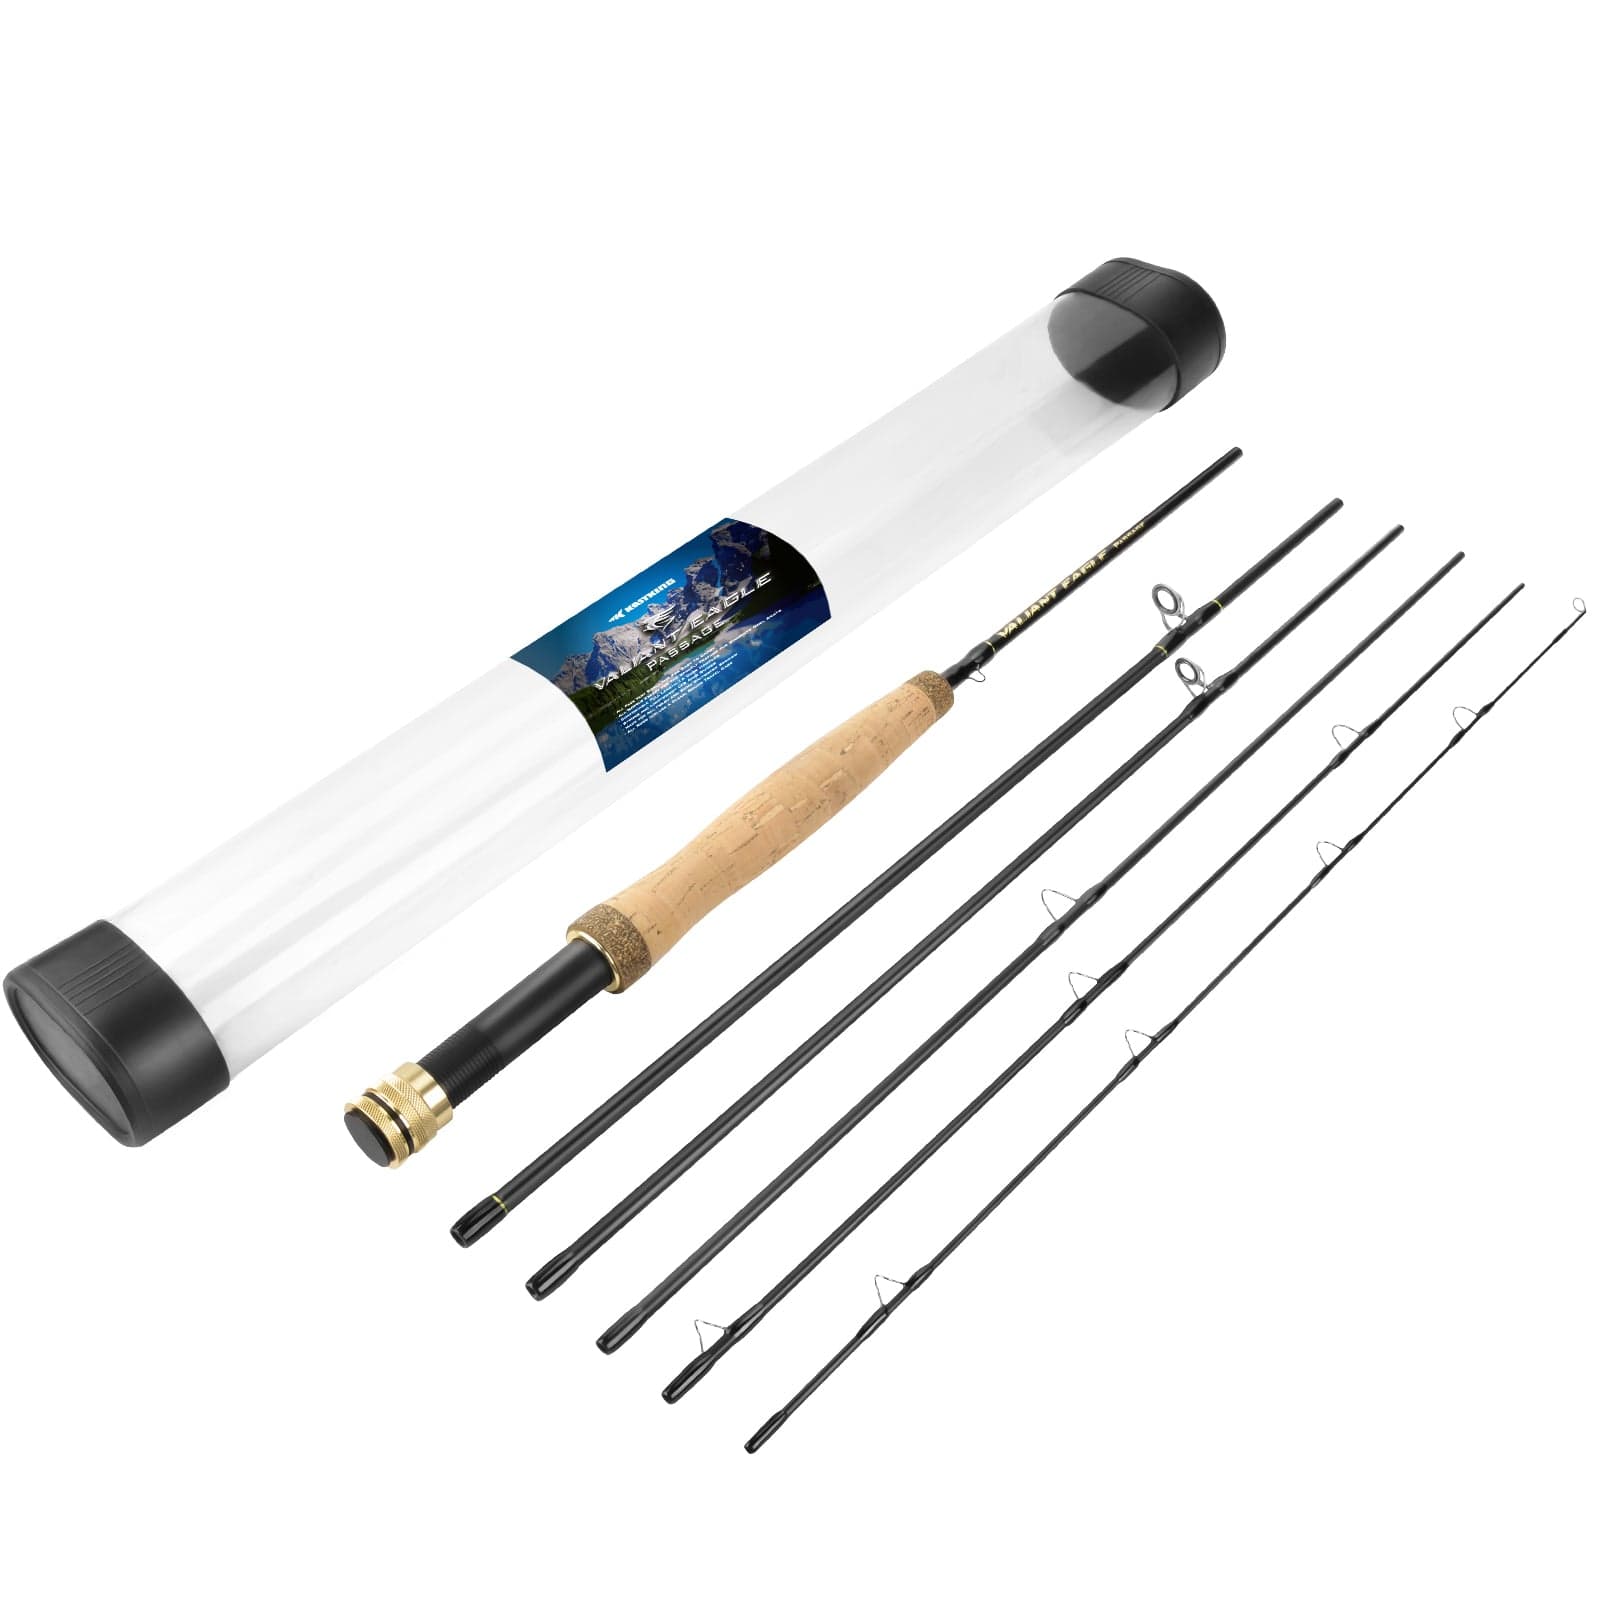 Portable Travel Fishing Rod Lightweight Carbon Fiber 4 Pieces Fishing Pole  